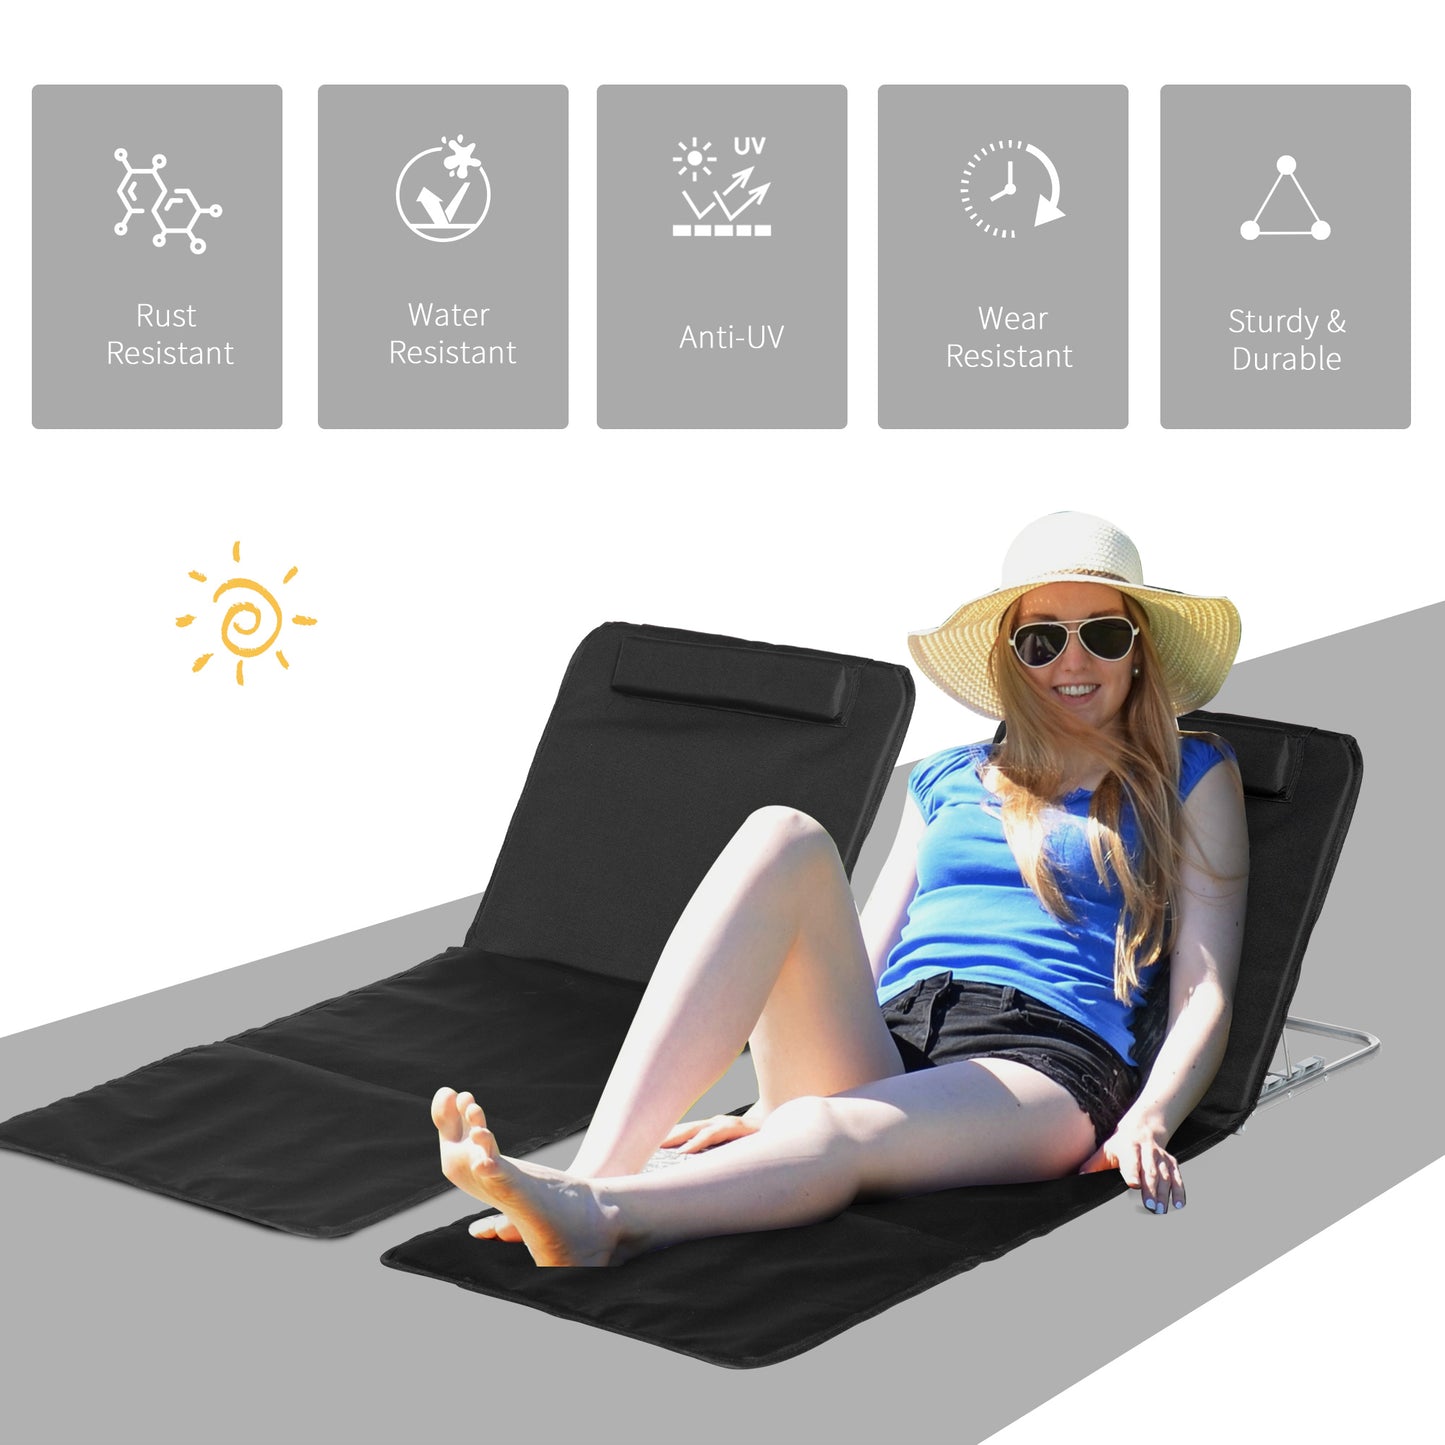 Outsunny Foldable Beach Chair Mats Set of 2: Lightweight Garden Sun Loungers with Adjustable Back & Head Pillow, Black